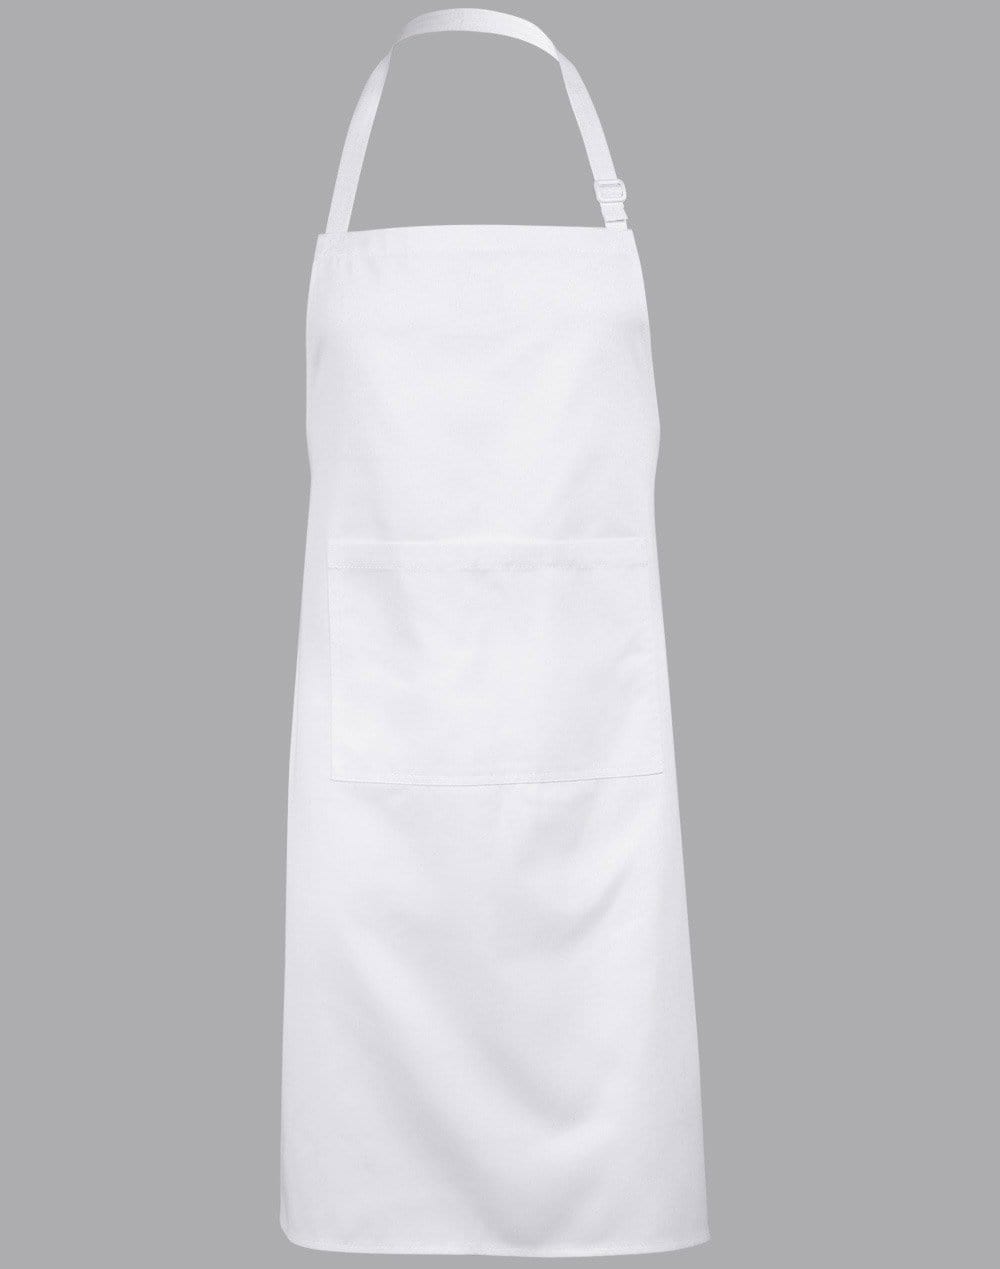 Bib Apron AP03 Hospitality & Chefwear Australian Industrial Wear White W 70cm x H 86cm 